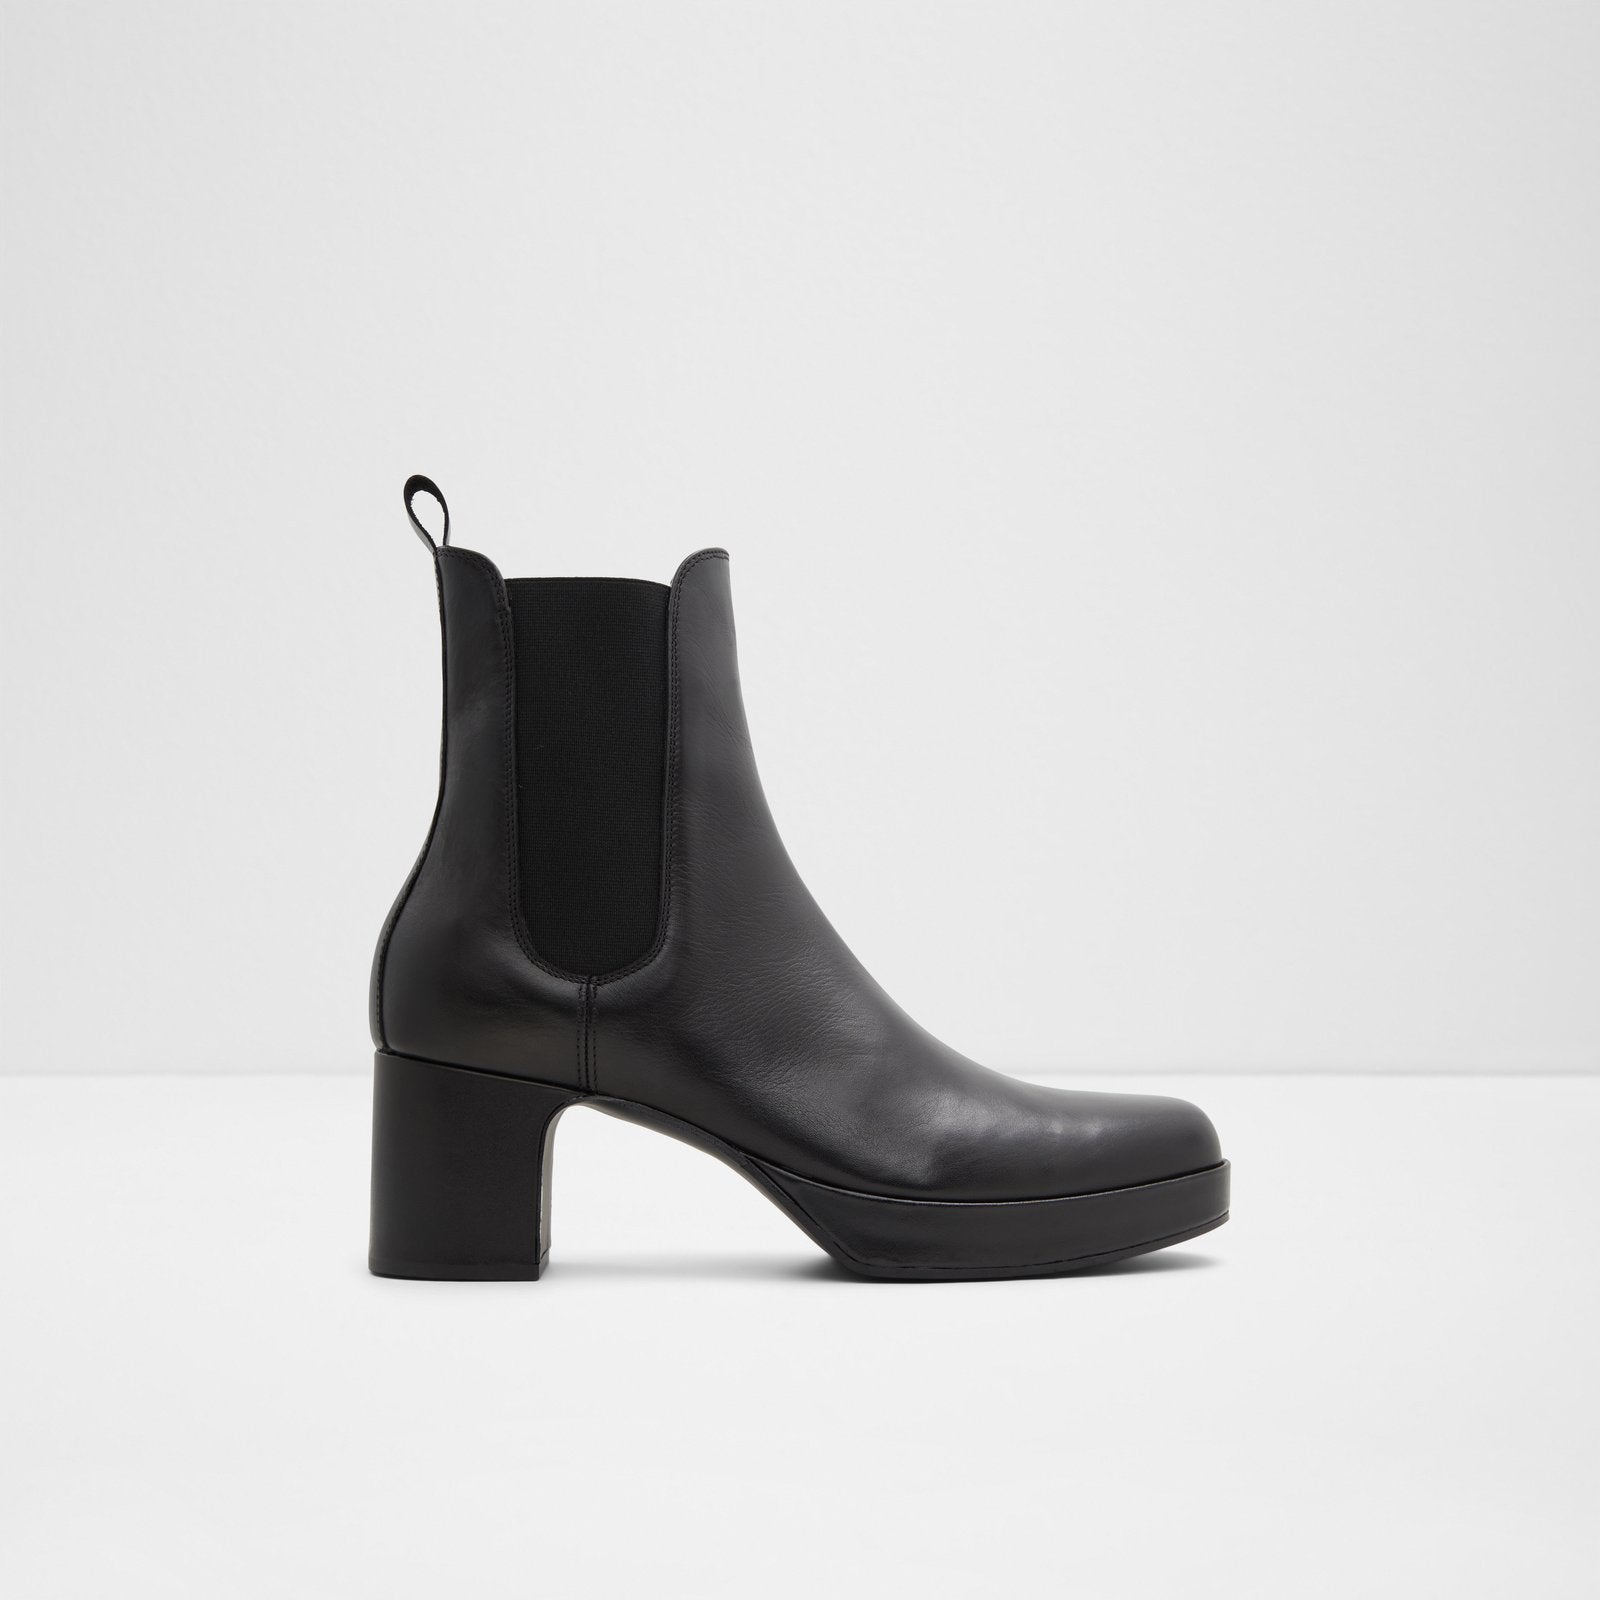 Aldo Men’s Ankle Boots Ibirakoth (Black)